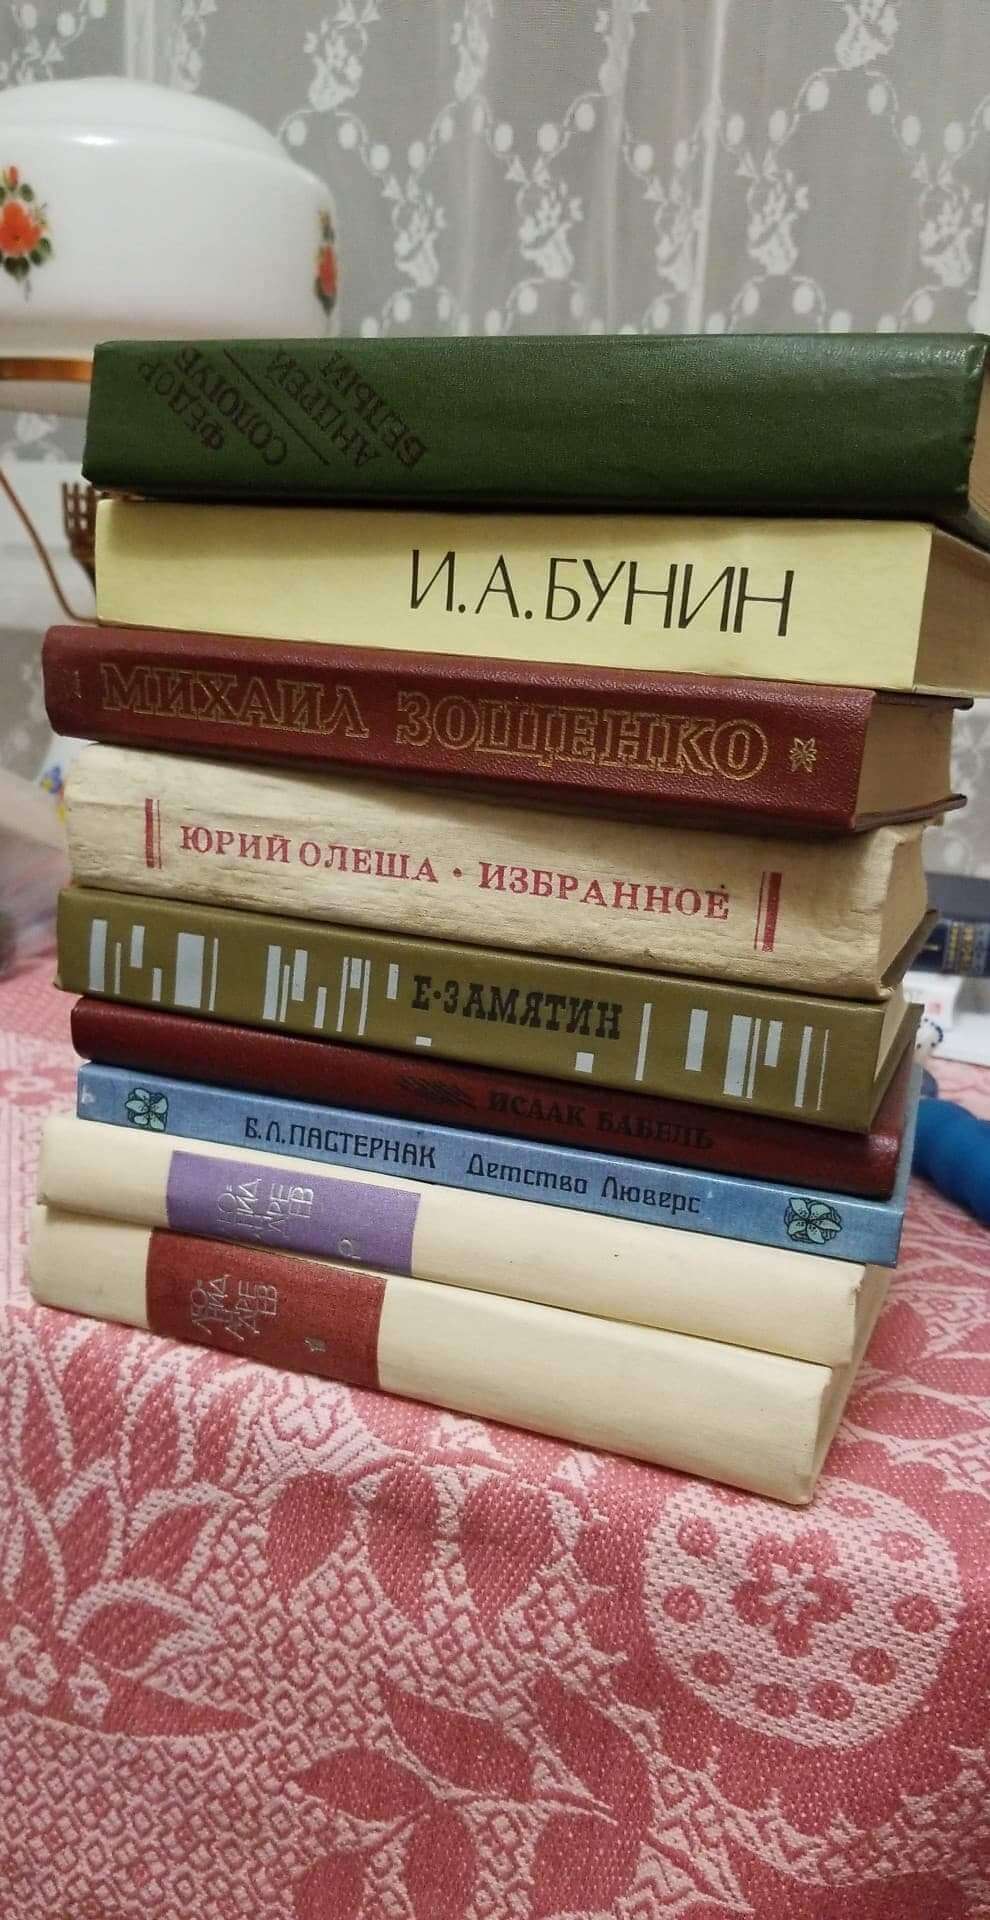 Soviet books